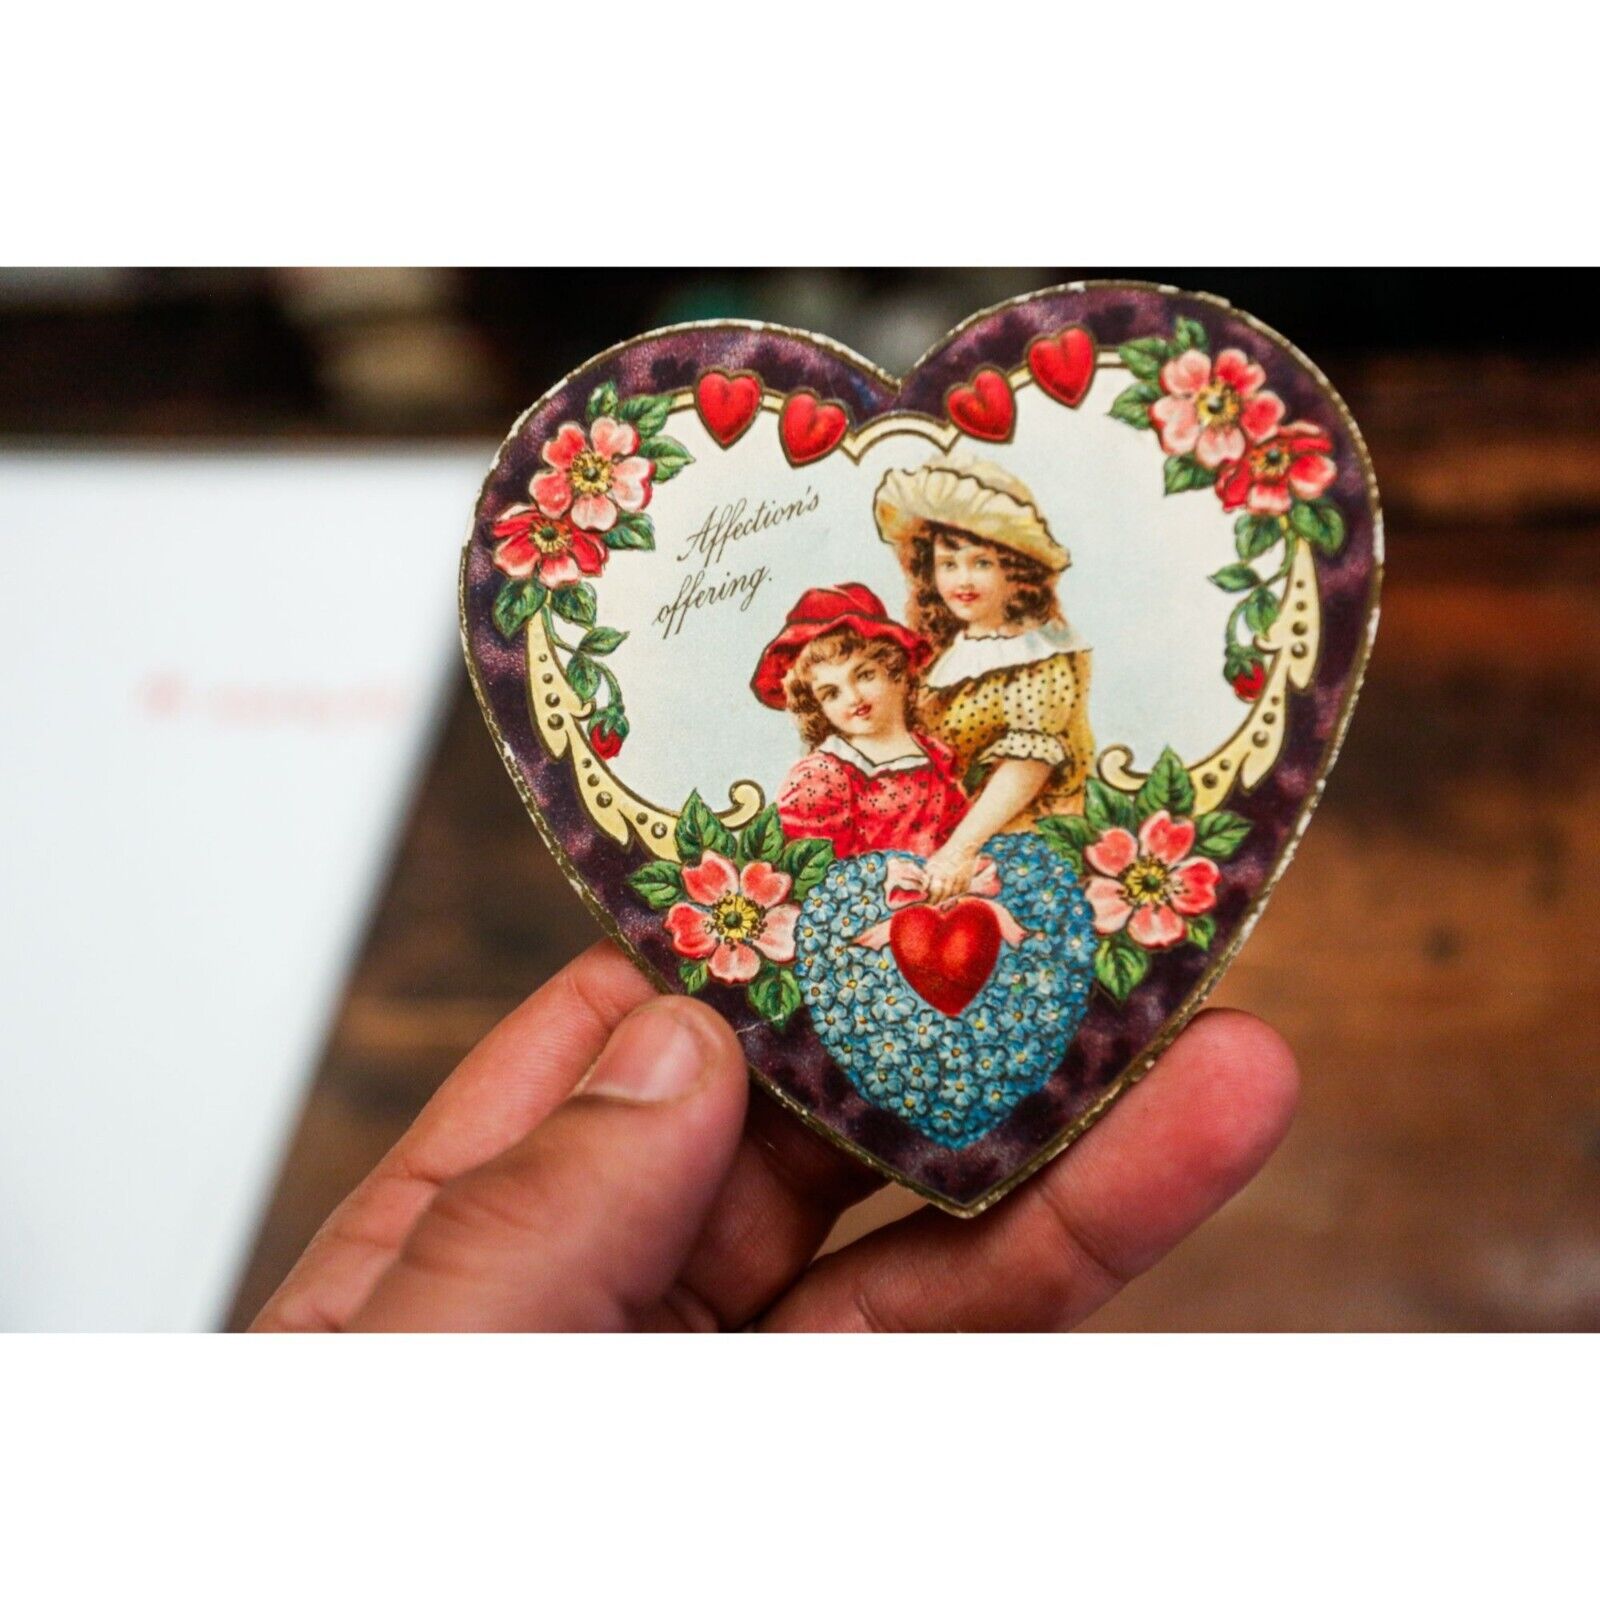 Affections Offering Antique Holiday Valentine Flowers Little Girls Ephemera